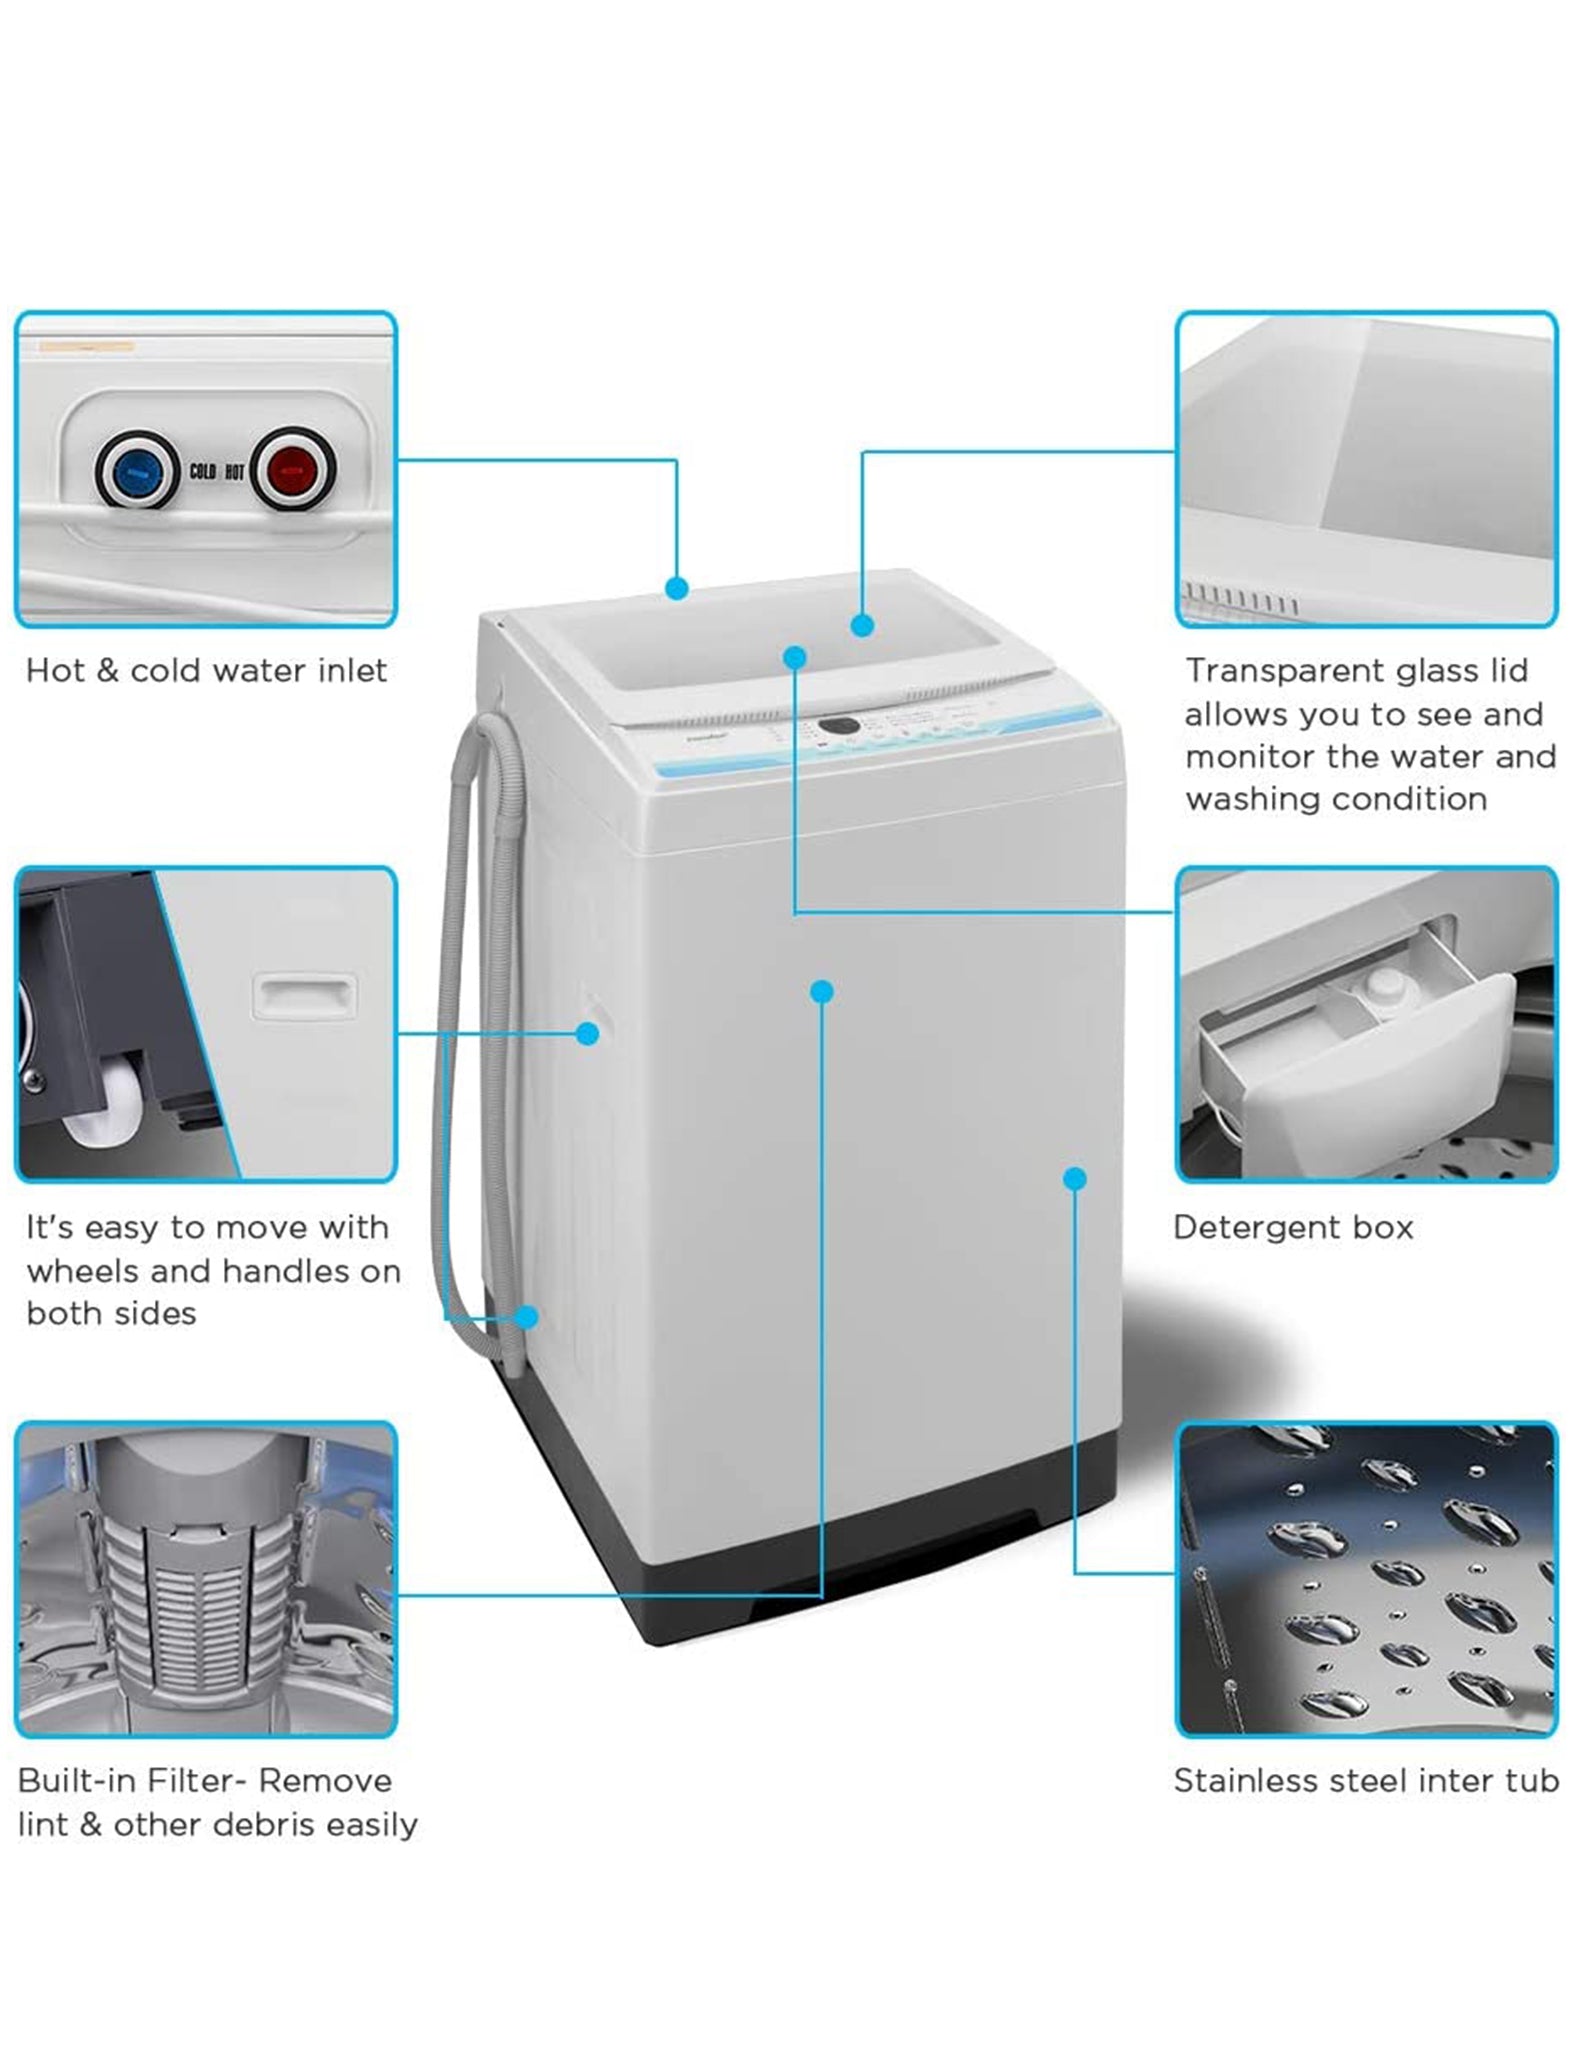 Comfee E08 6/7/8KG Automatic Washing Machine, Buy Comfee Washing